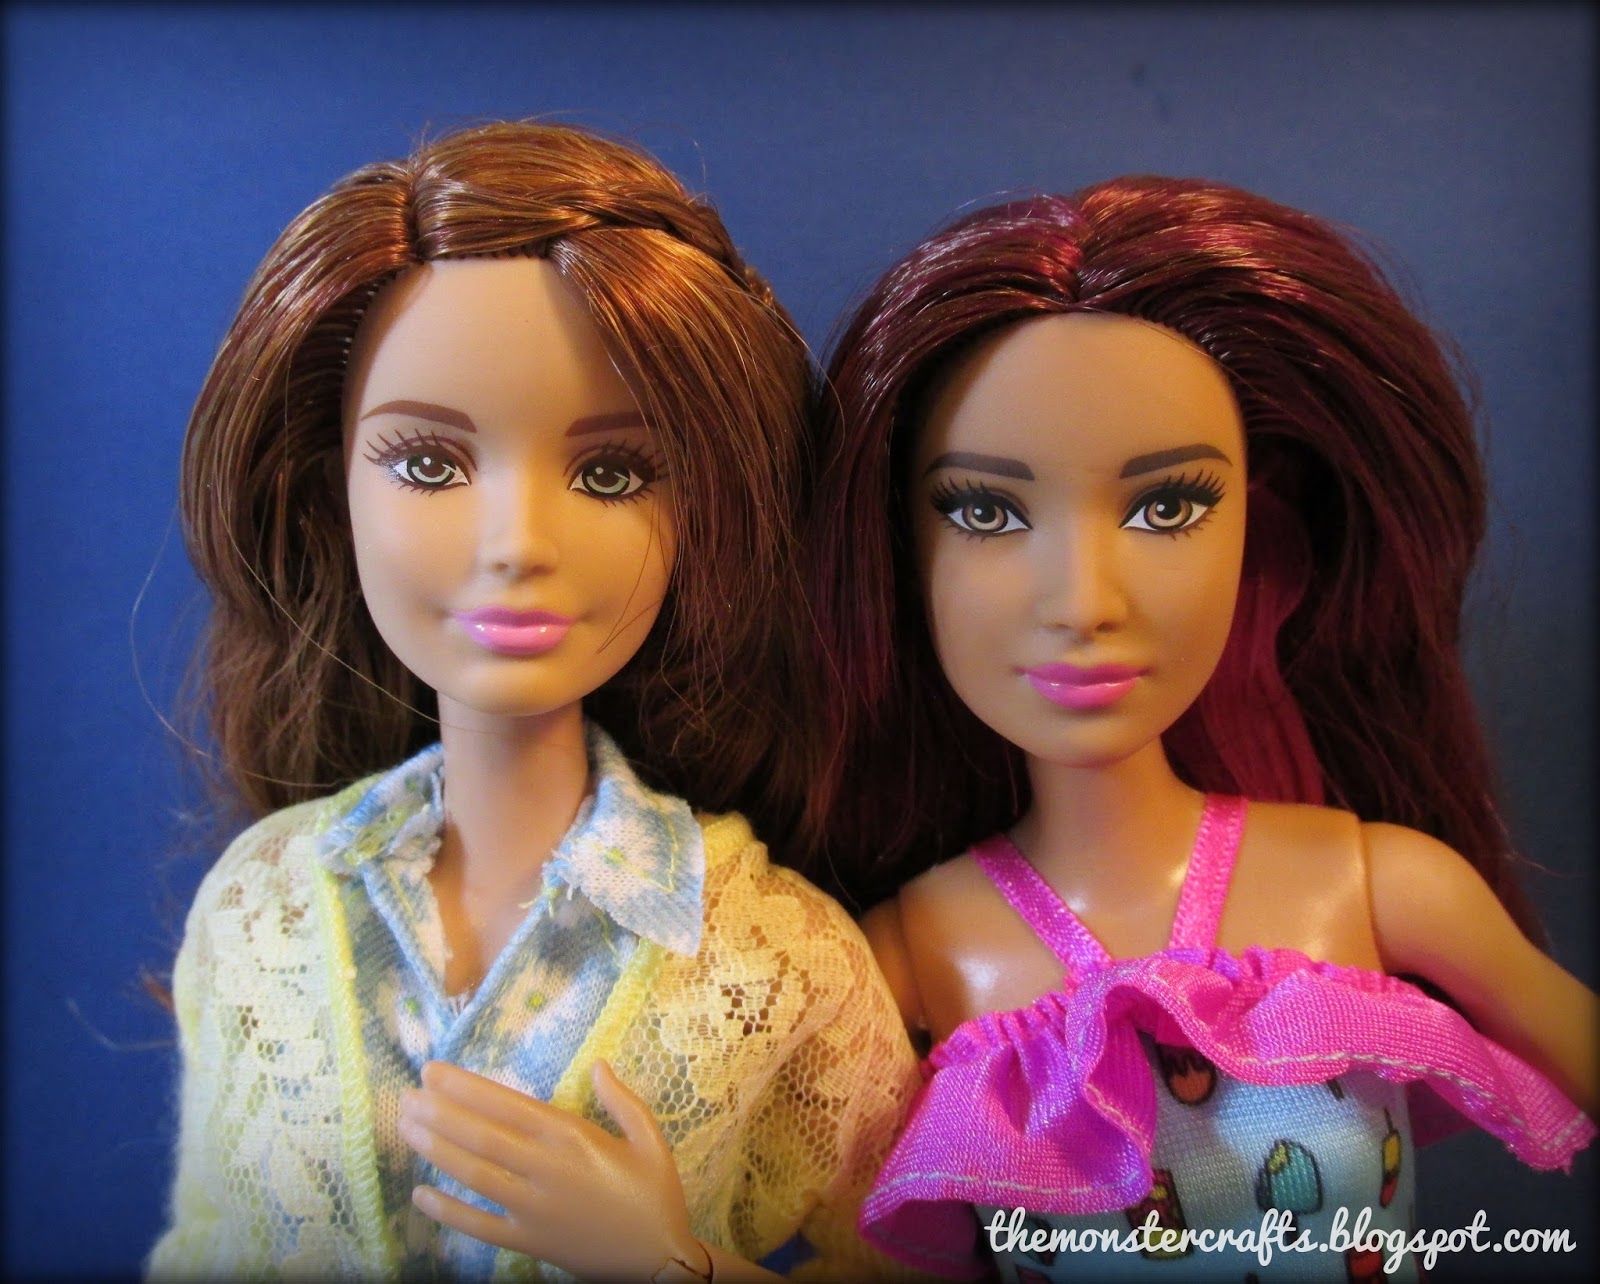 Doll Review: Barbie Fashionistas 